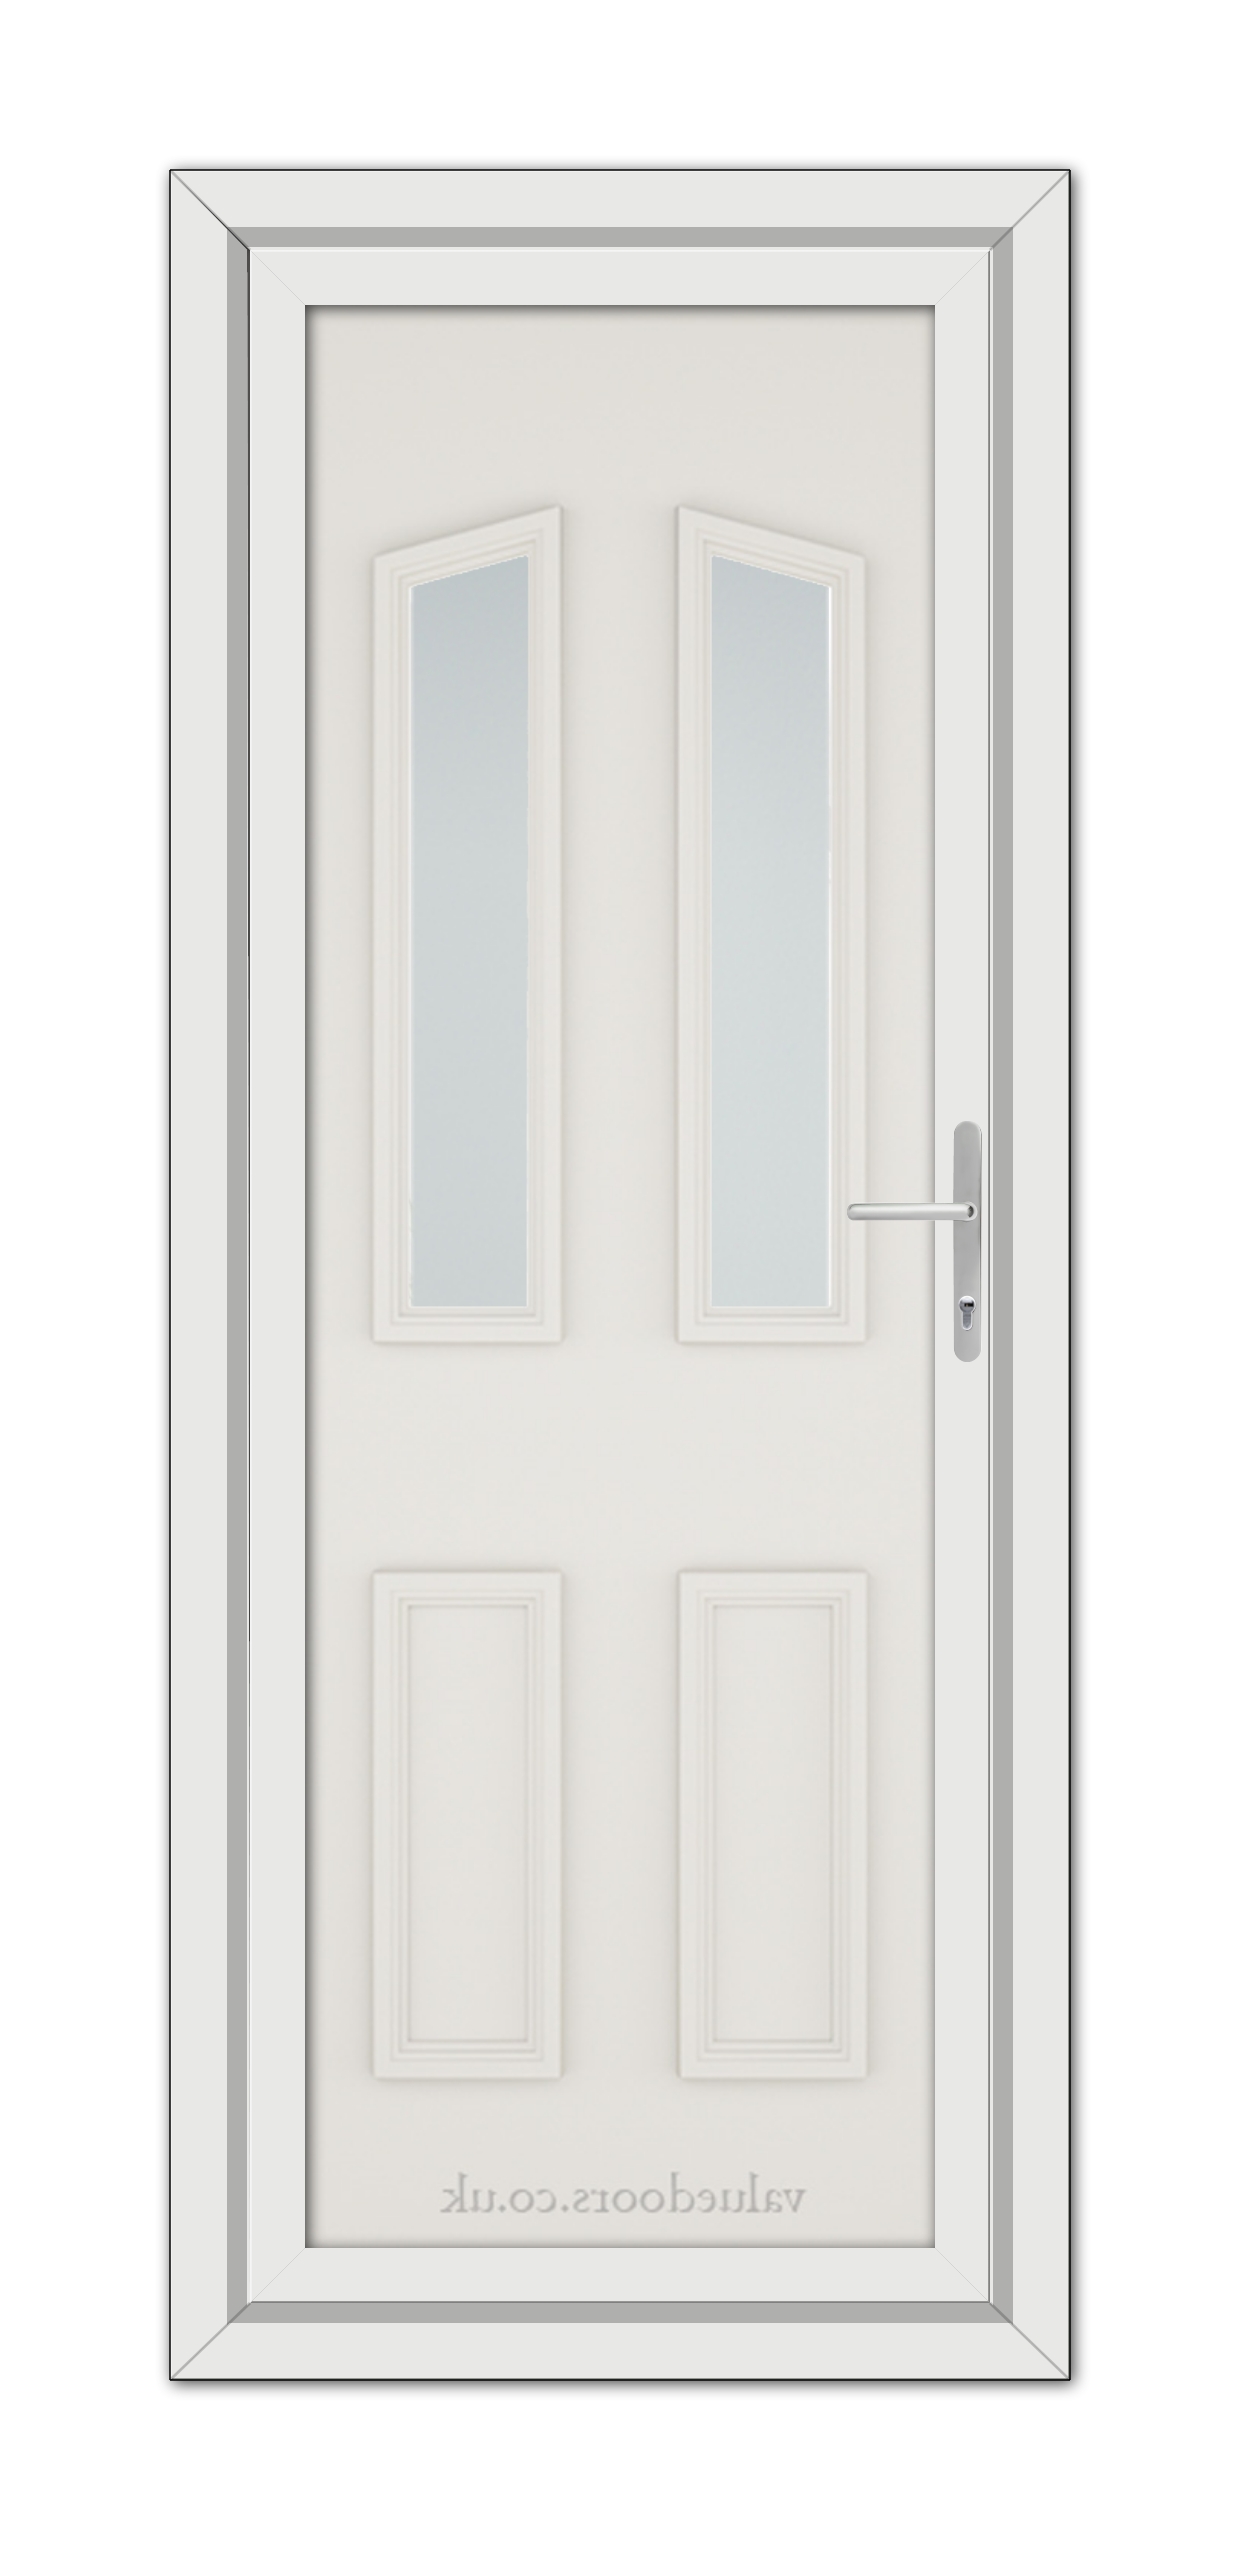 A White Cream Kensington uPVC Door with glass panels.